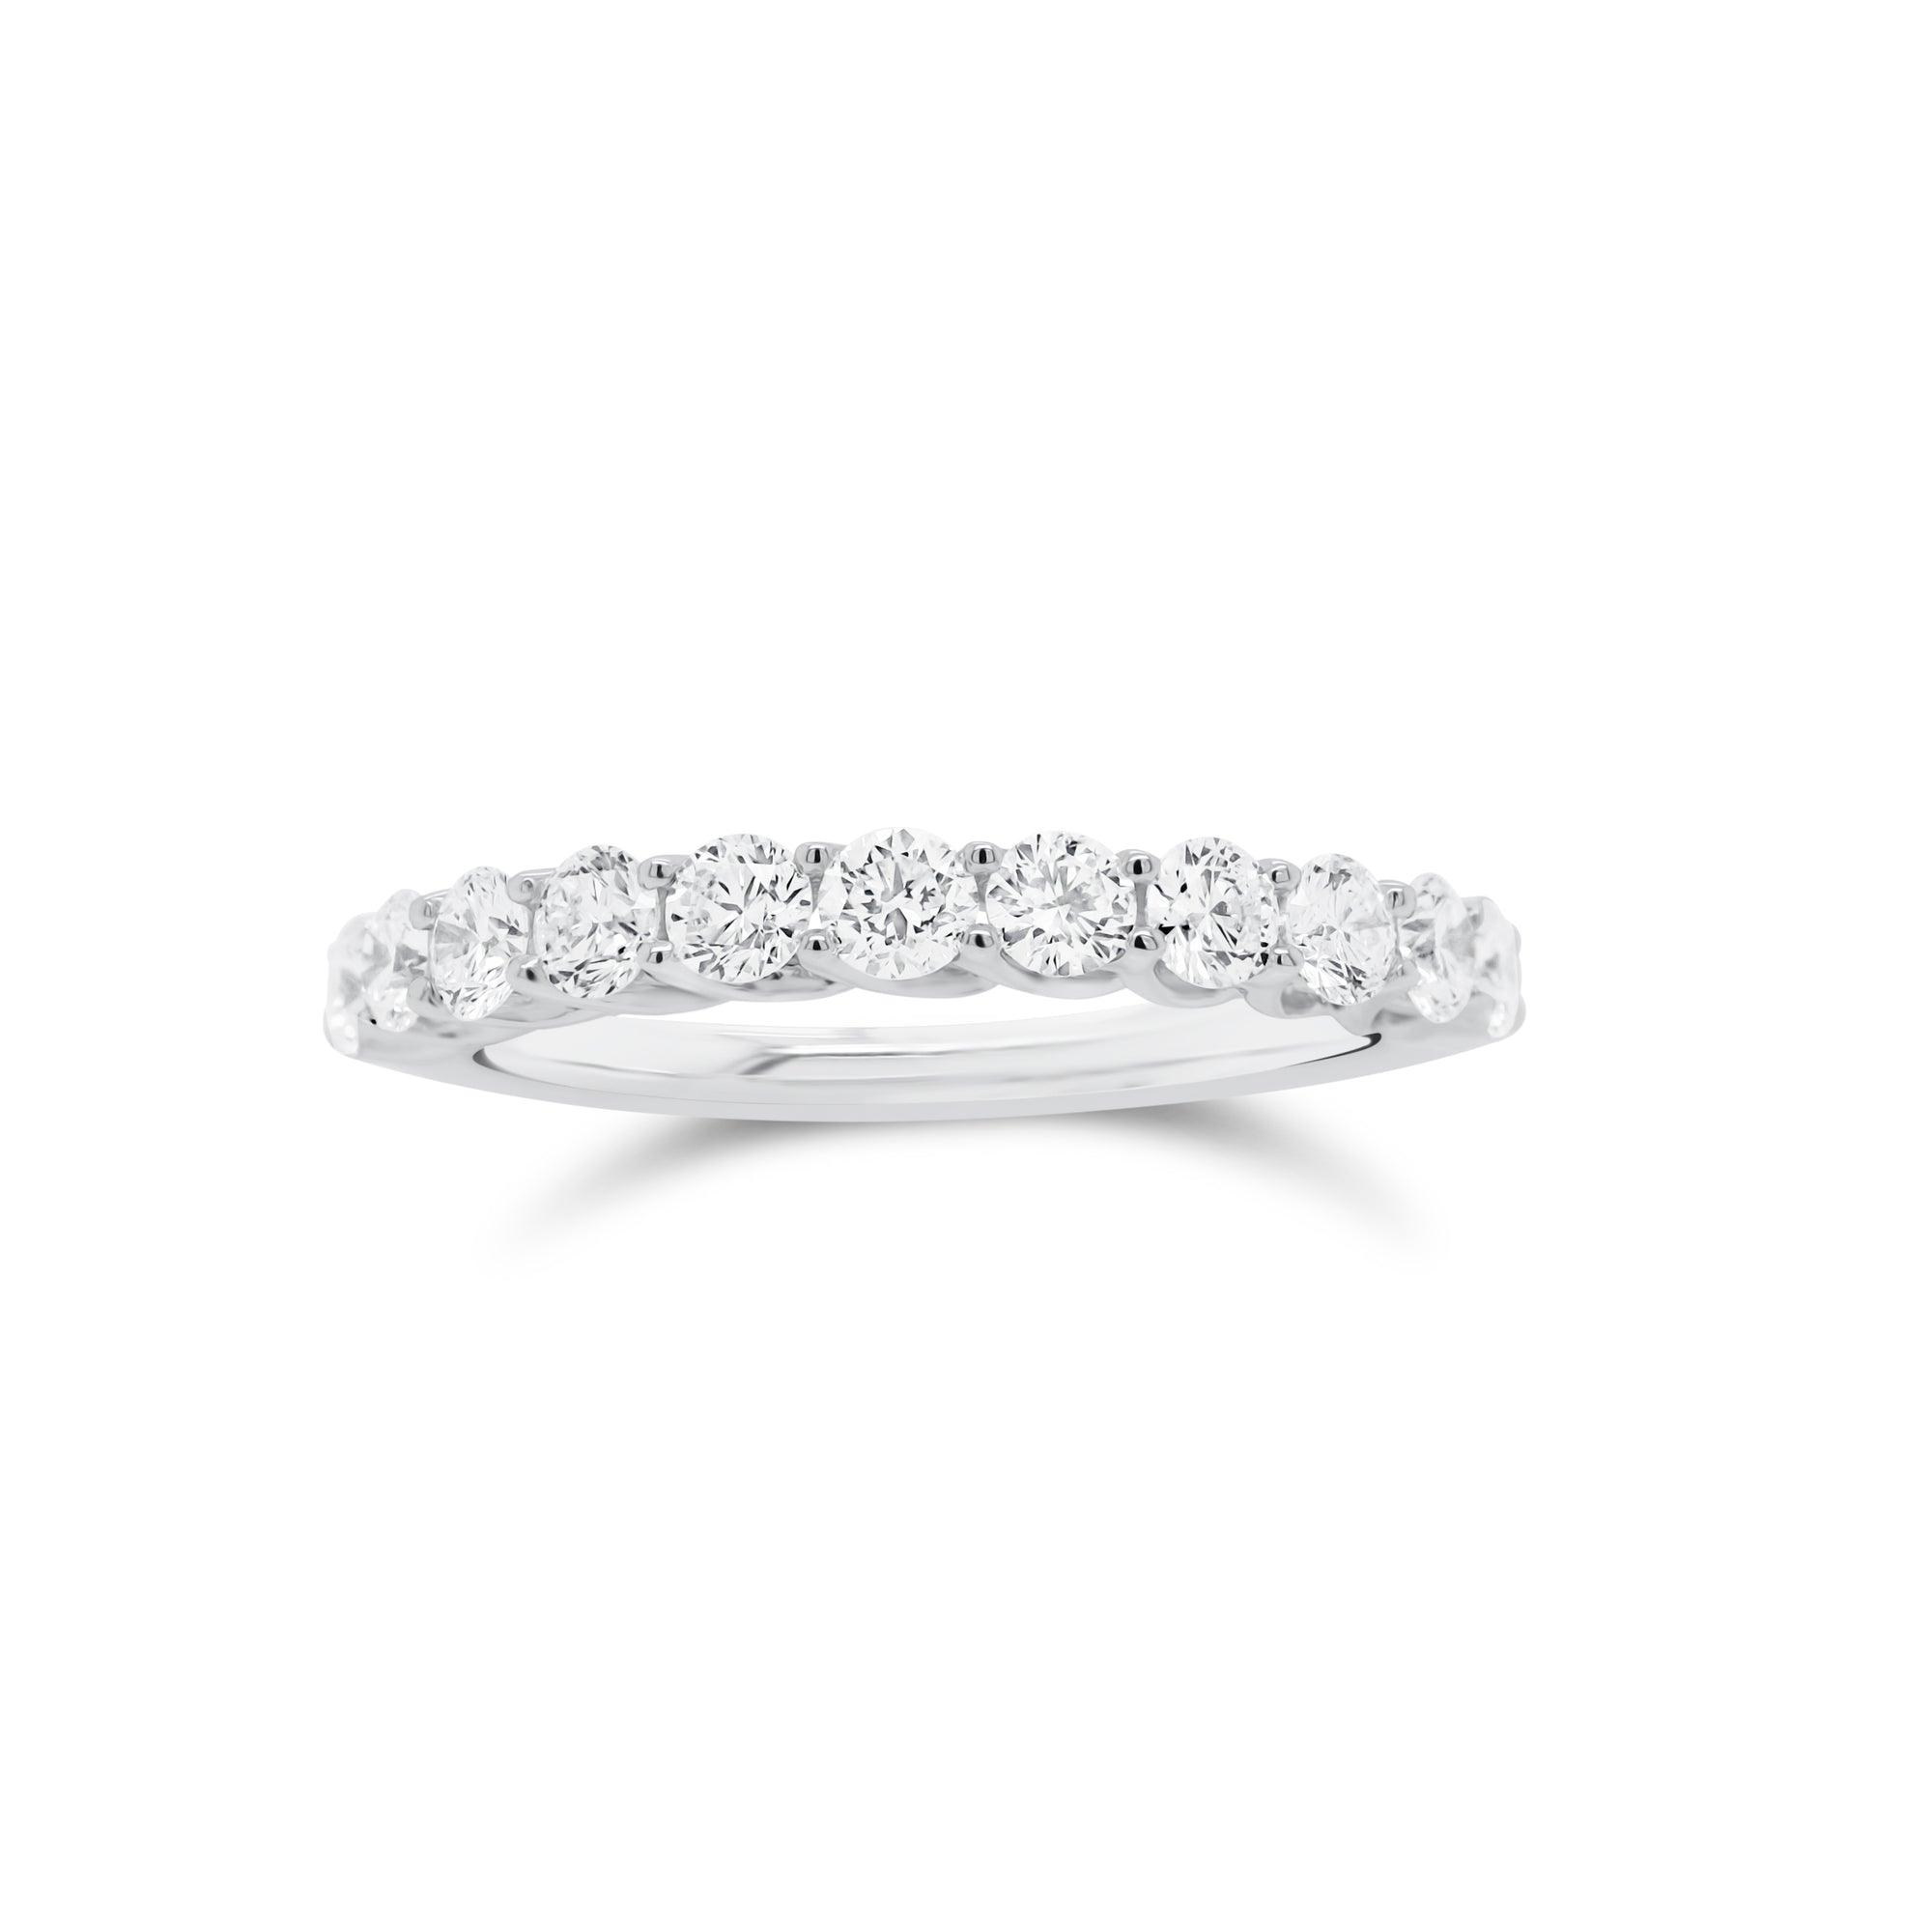 11-Stone Diamond Wedding Band - 18K gold weighing 2.44 grams  - 11 round diamonds totaling 0.88 carats